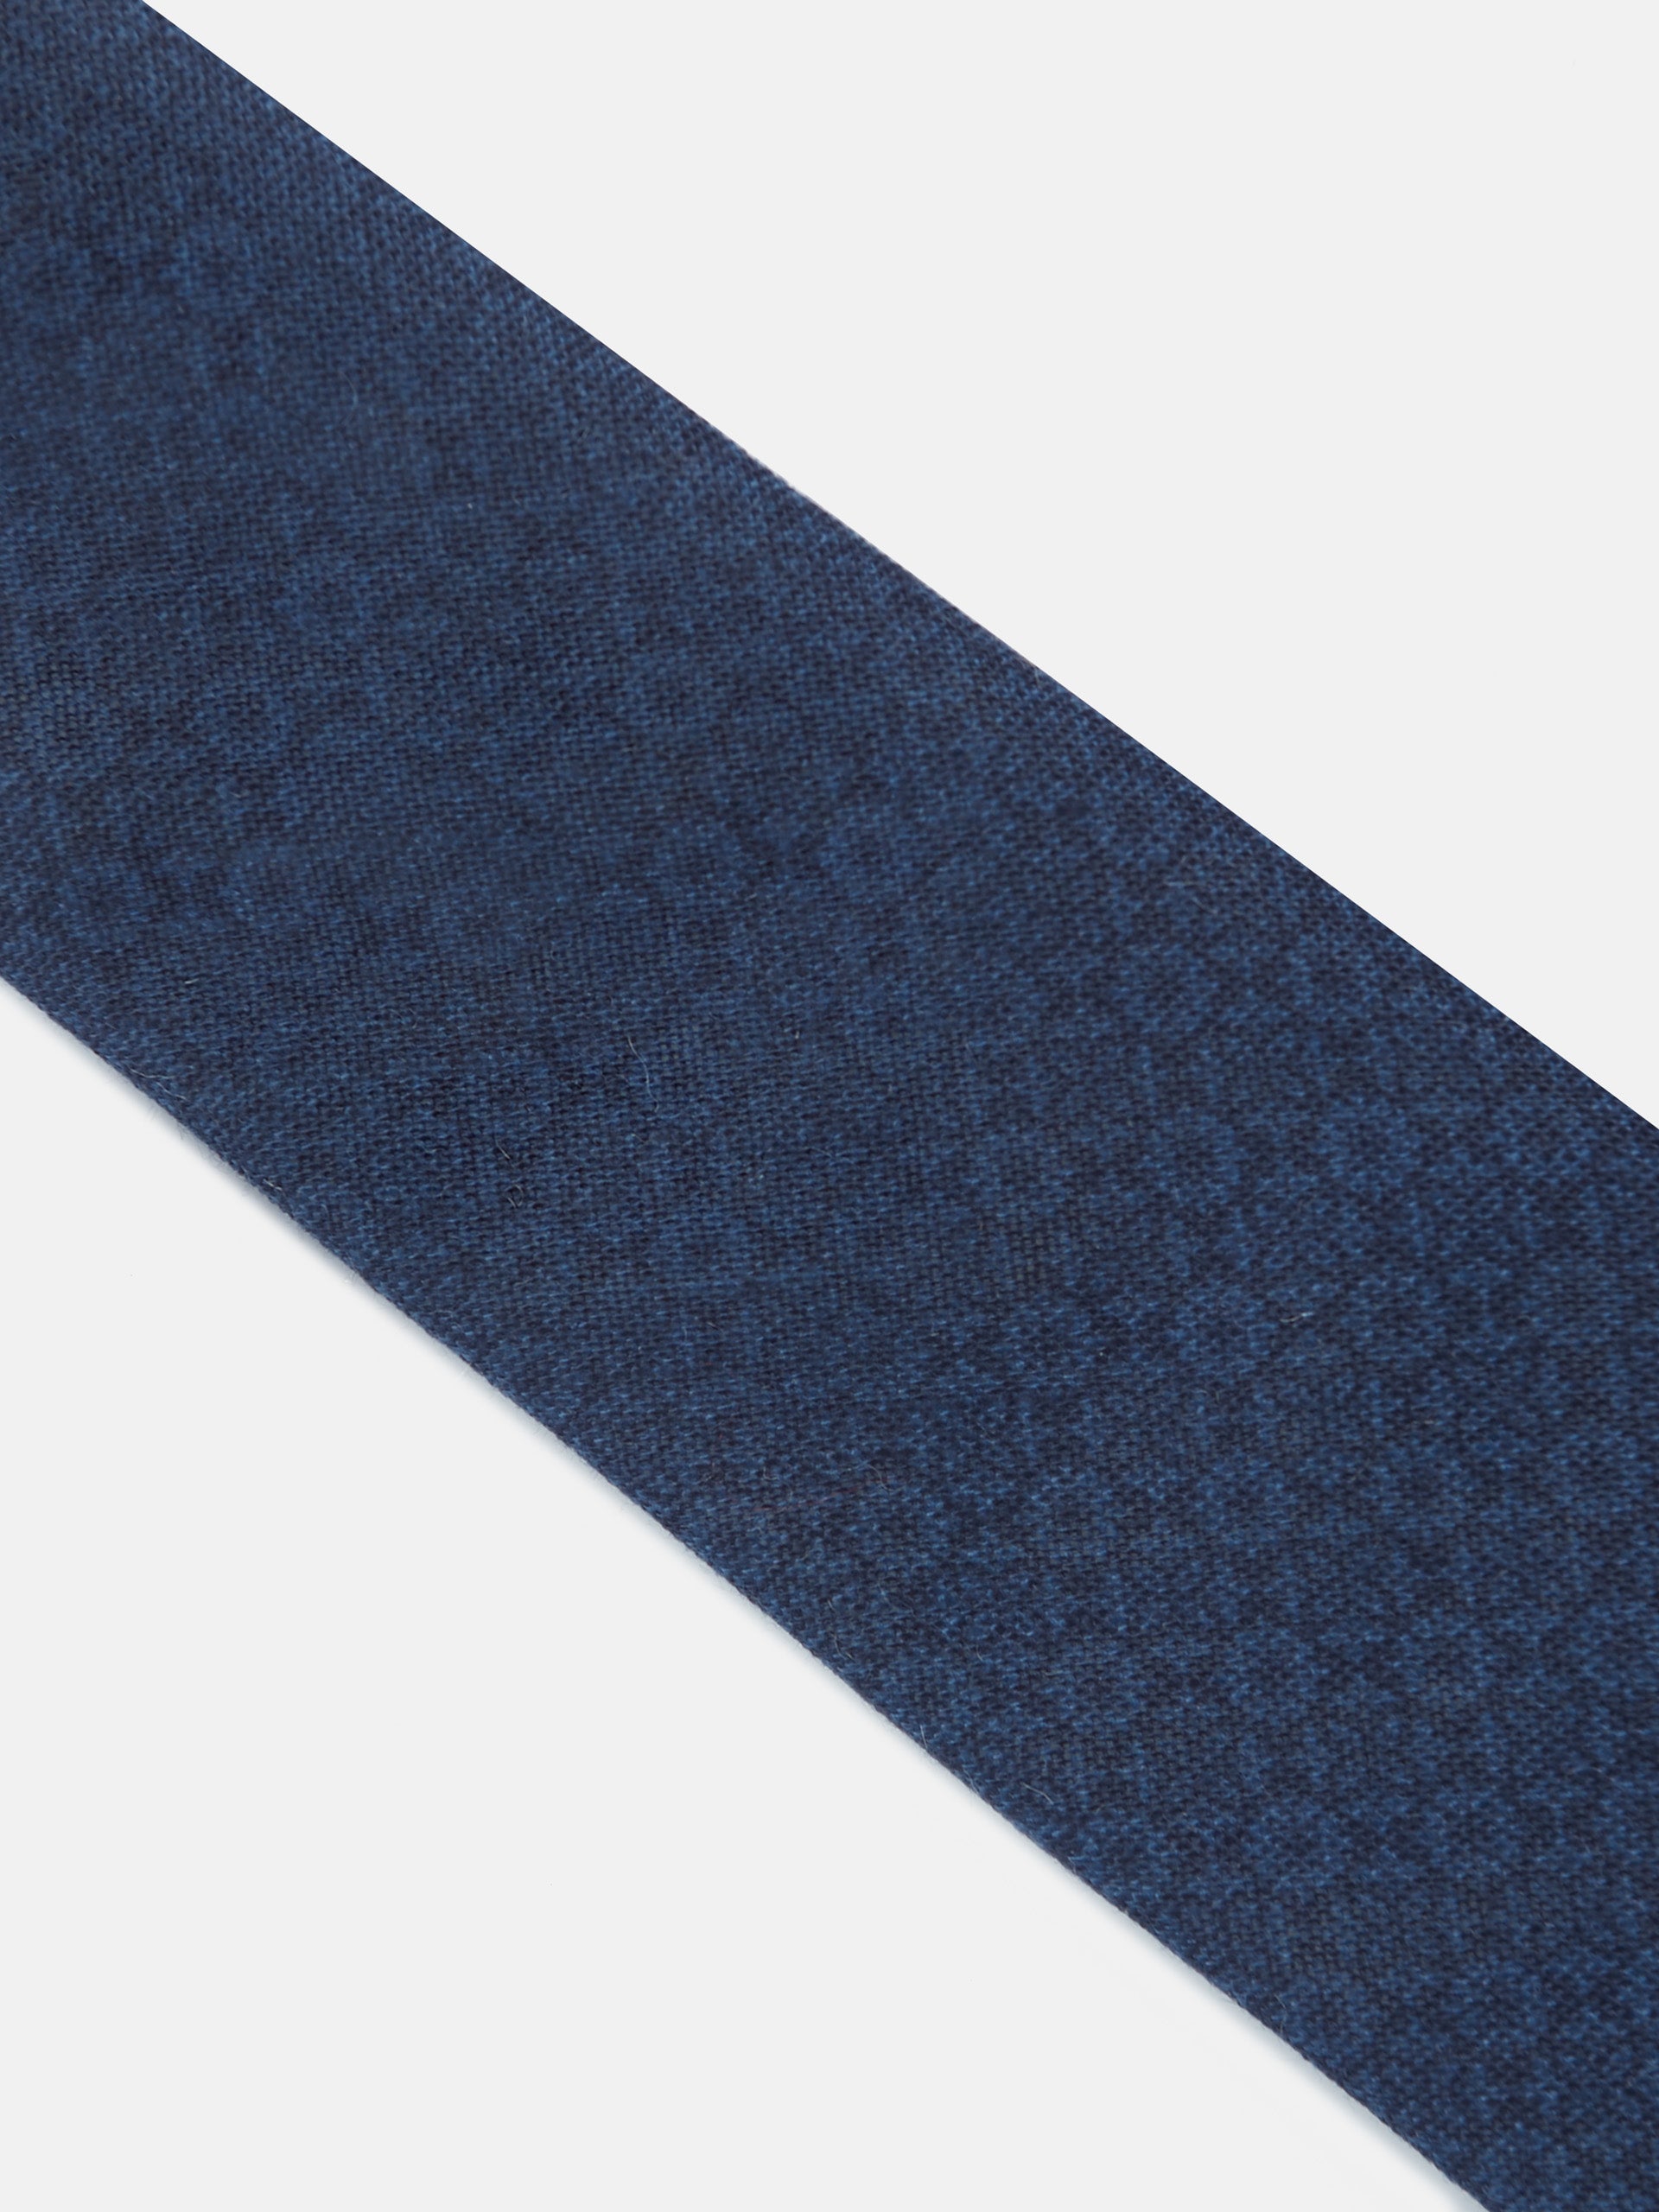 Corbata asti motivos azul